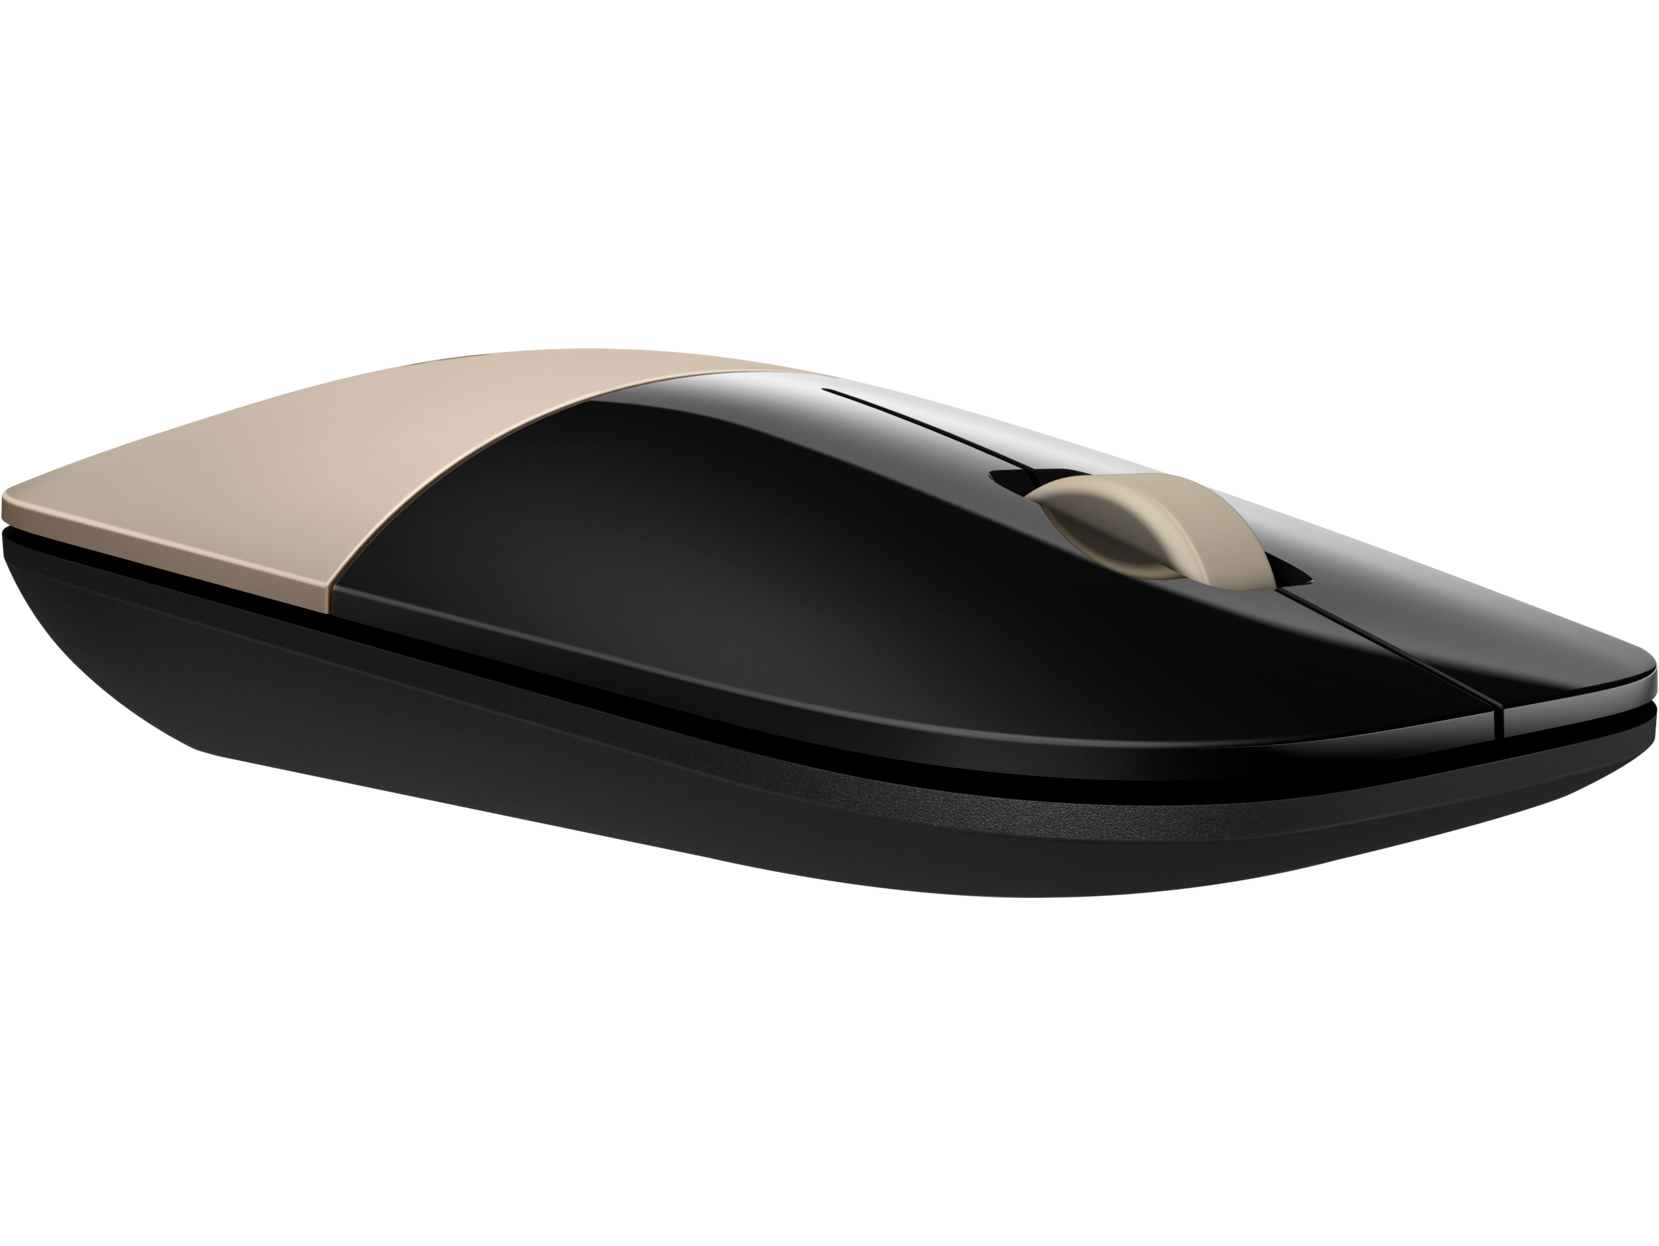 Мышь беспроводная HP Z3700 Gold Wireless Mouse (золотистый, USB, оптика, 1200 dpi, 2 кл., симметричный дизайн, RF 2.4GHz, 1 x AA) [ X7Q43AA ]